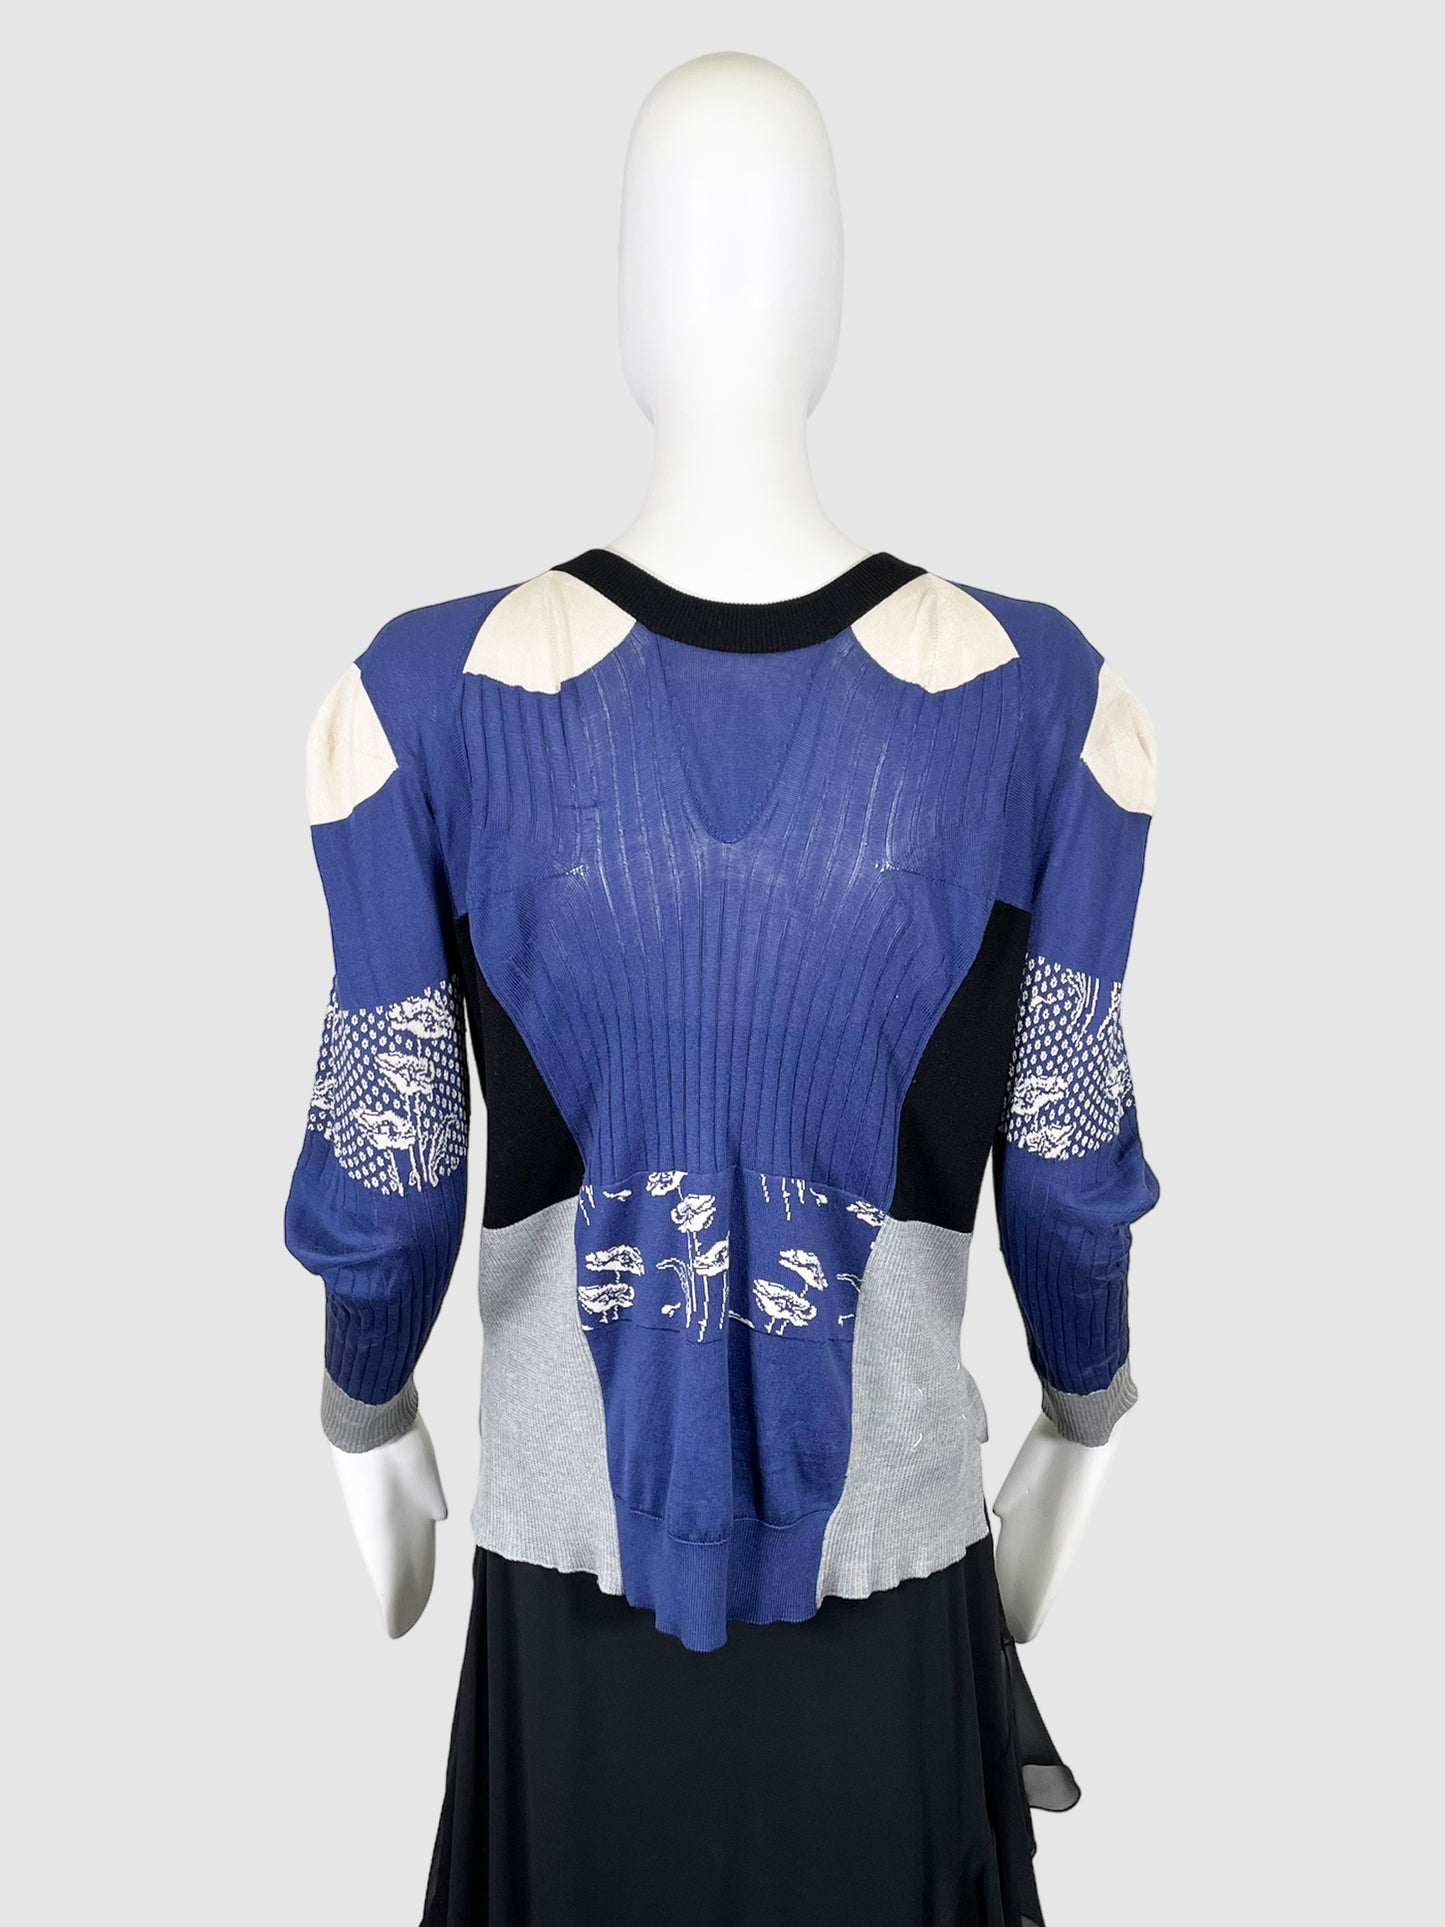 Maison Margiela Silk Lace-Up Cardigan - Size M/L